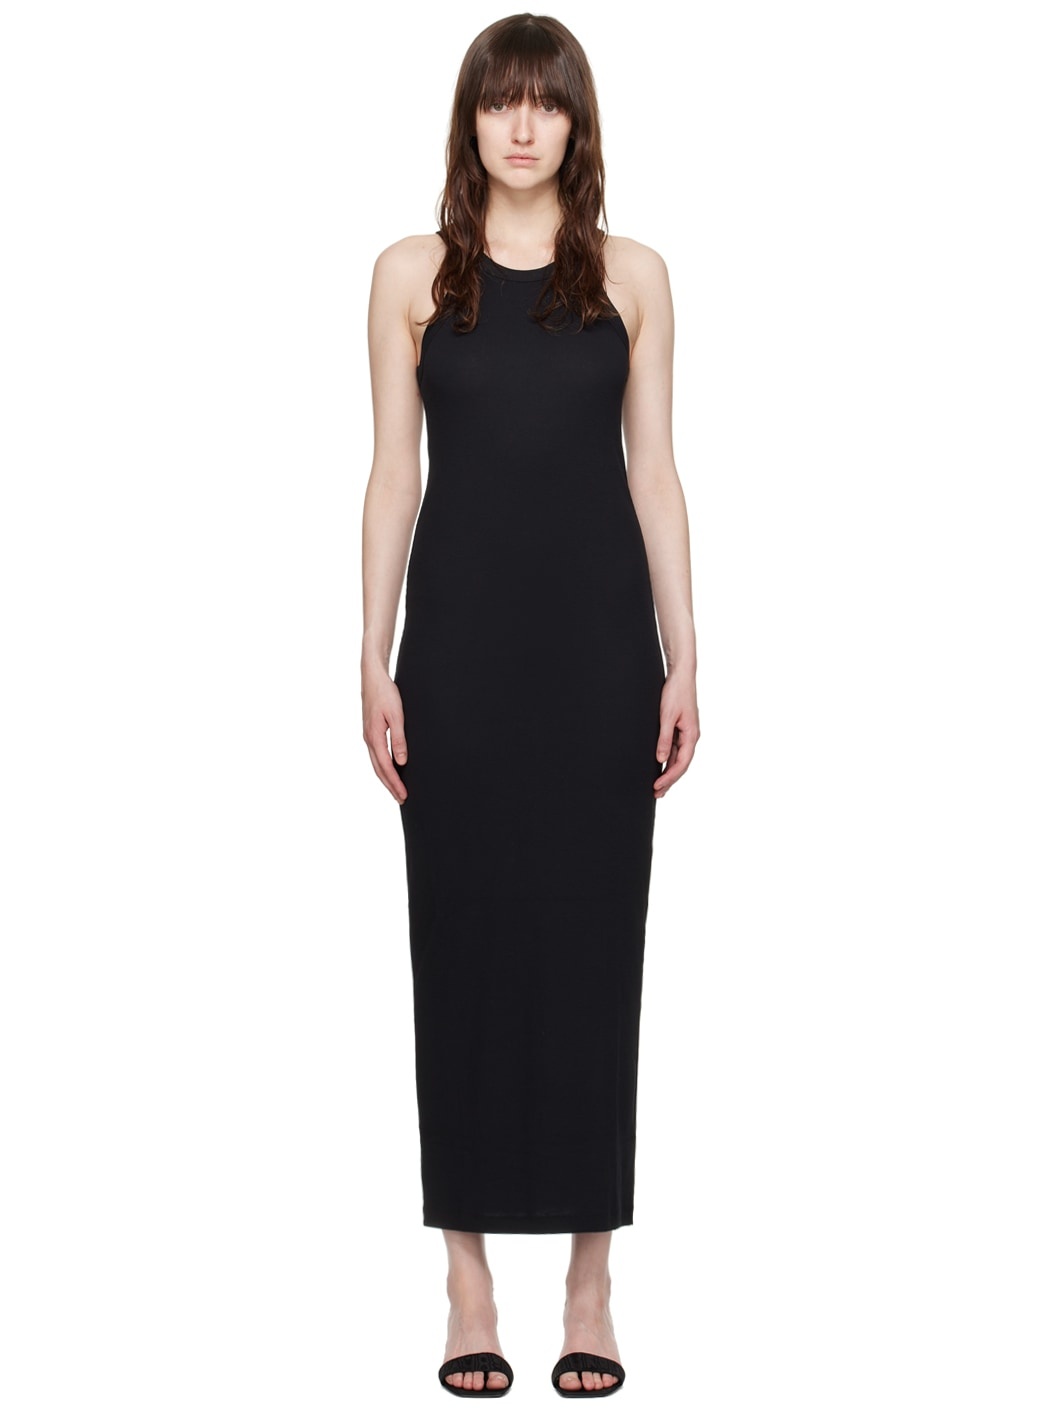 Black Curved Maxi Dress - 1